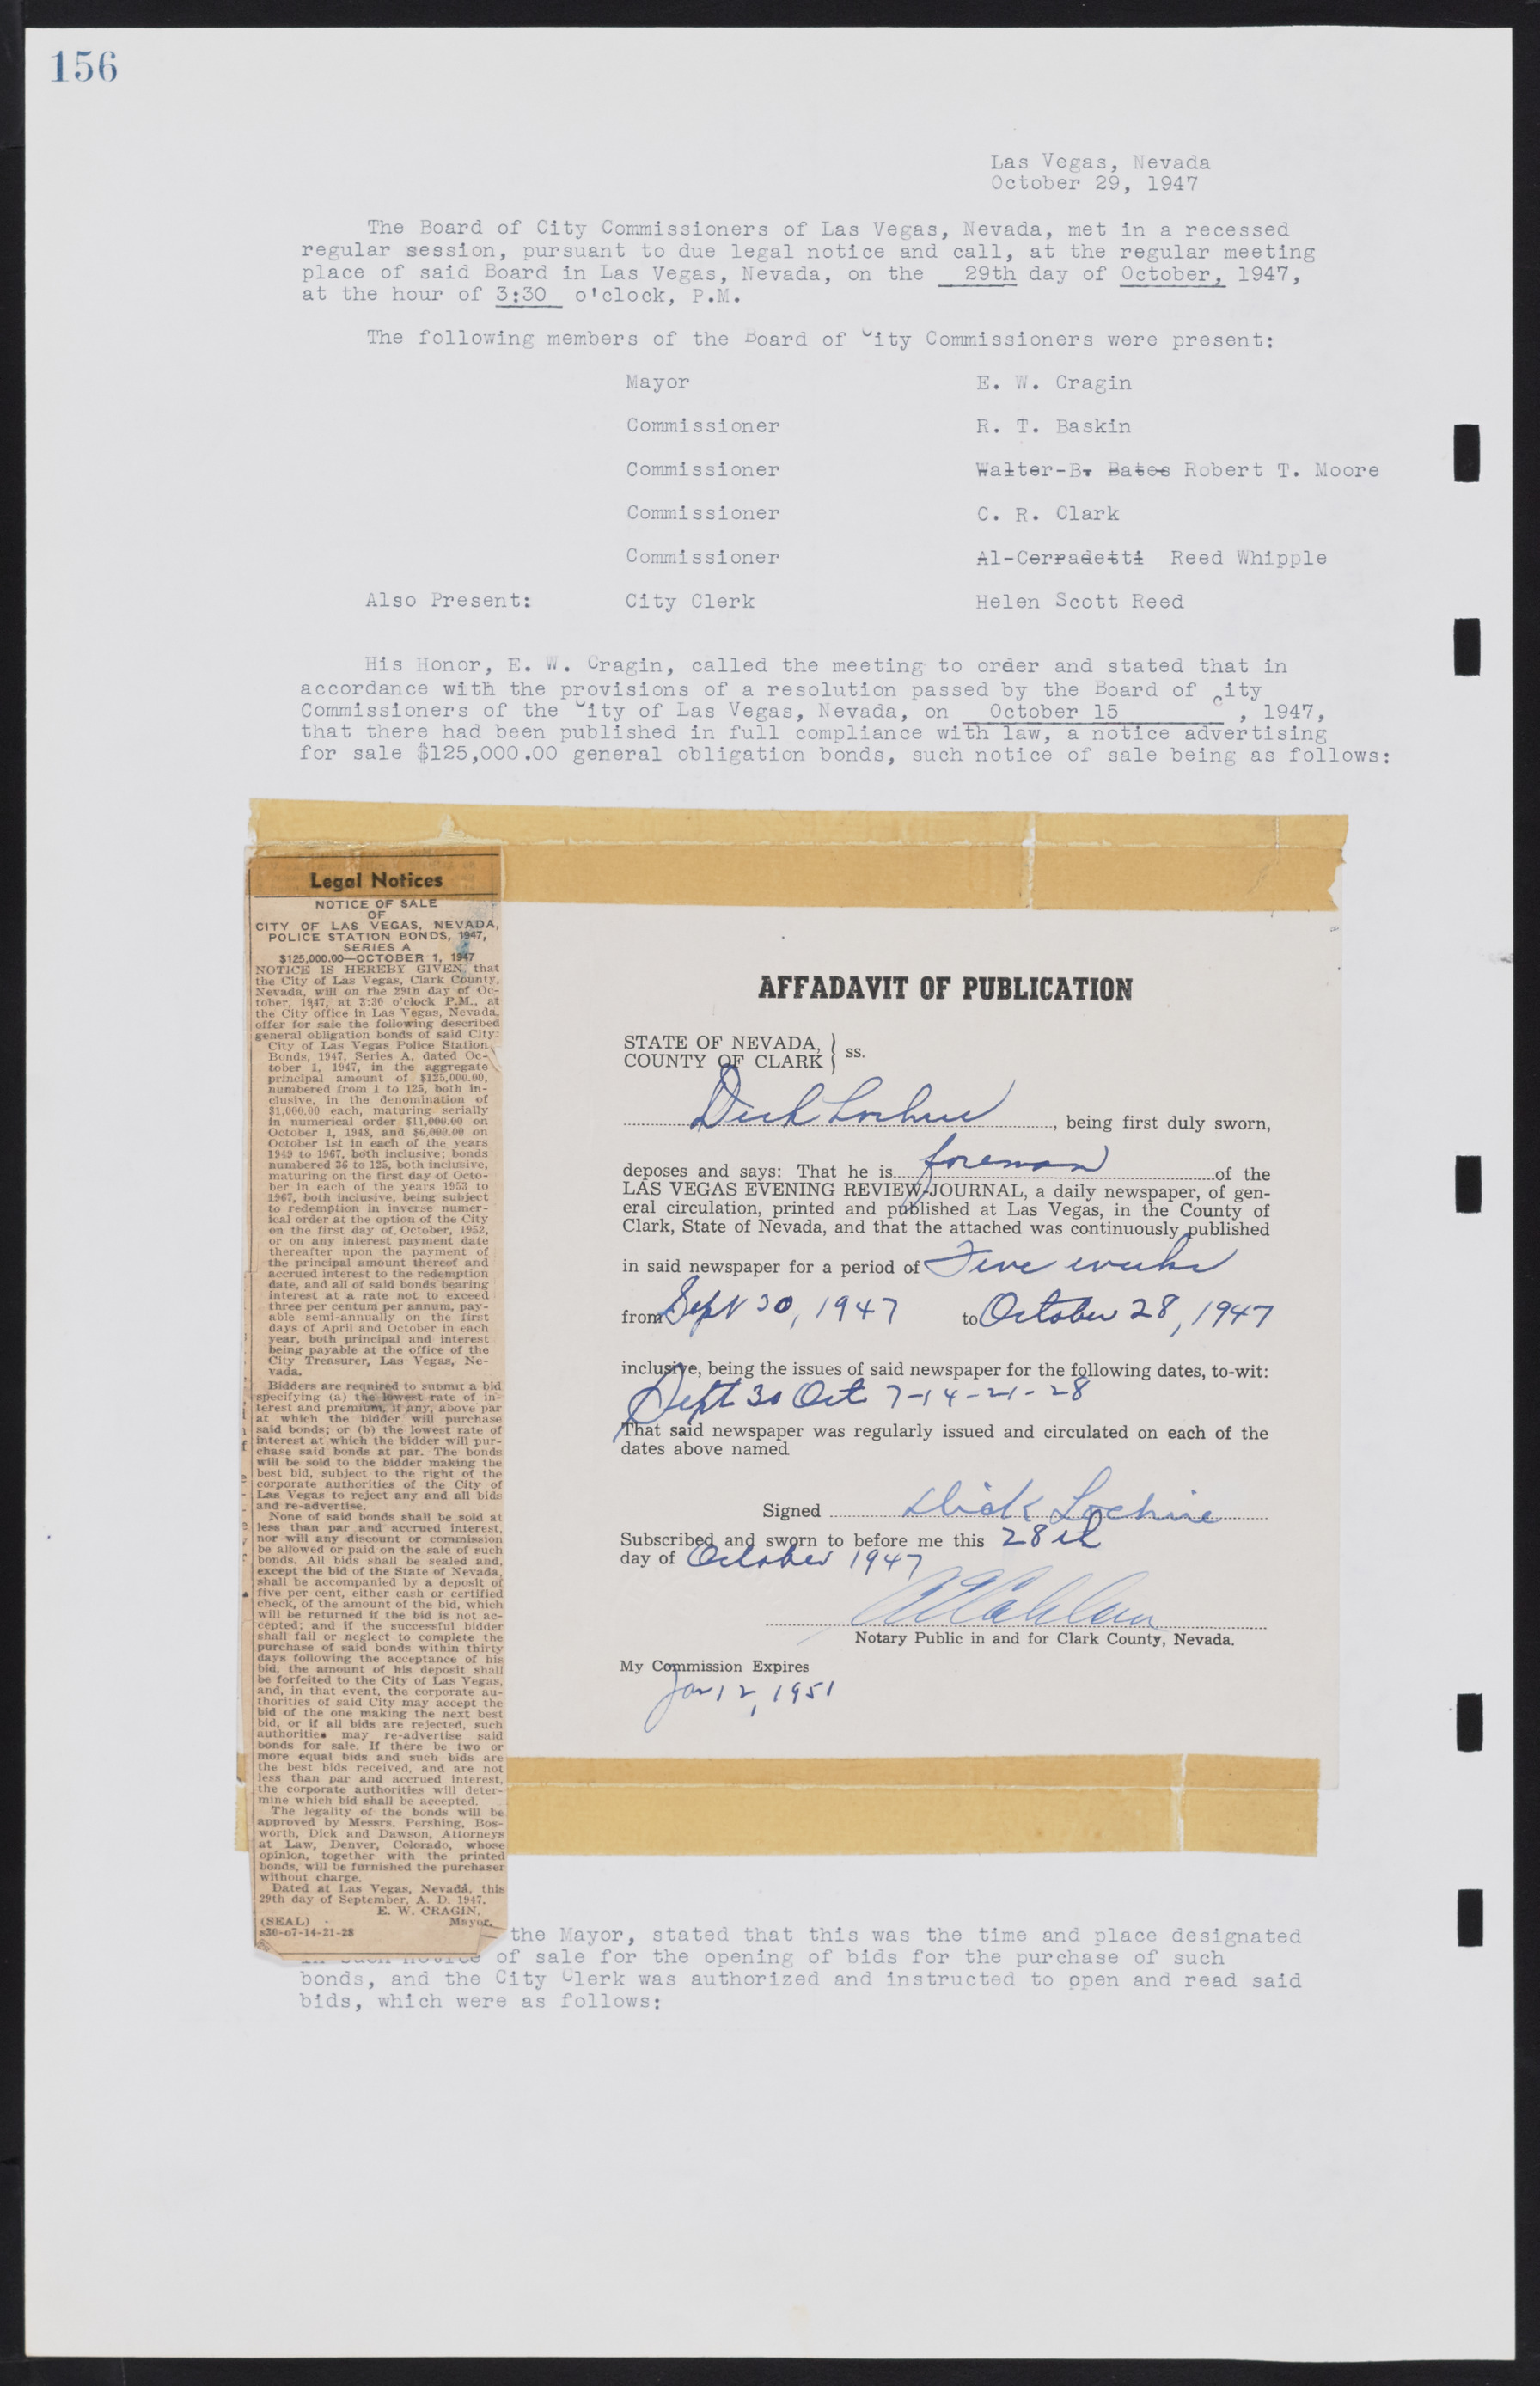 Las Vegas City Commission Minutes, January 7, 1947 to October 26, 1949, lvc000006-175